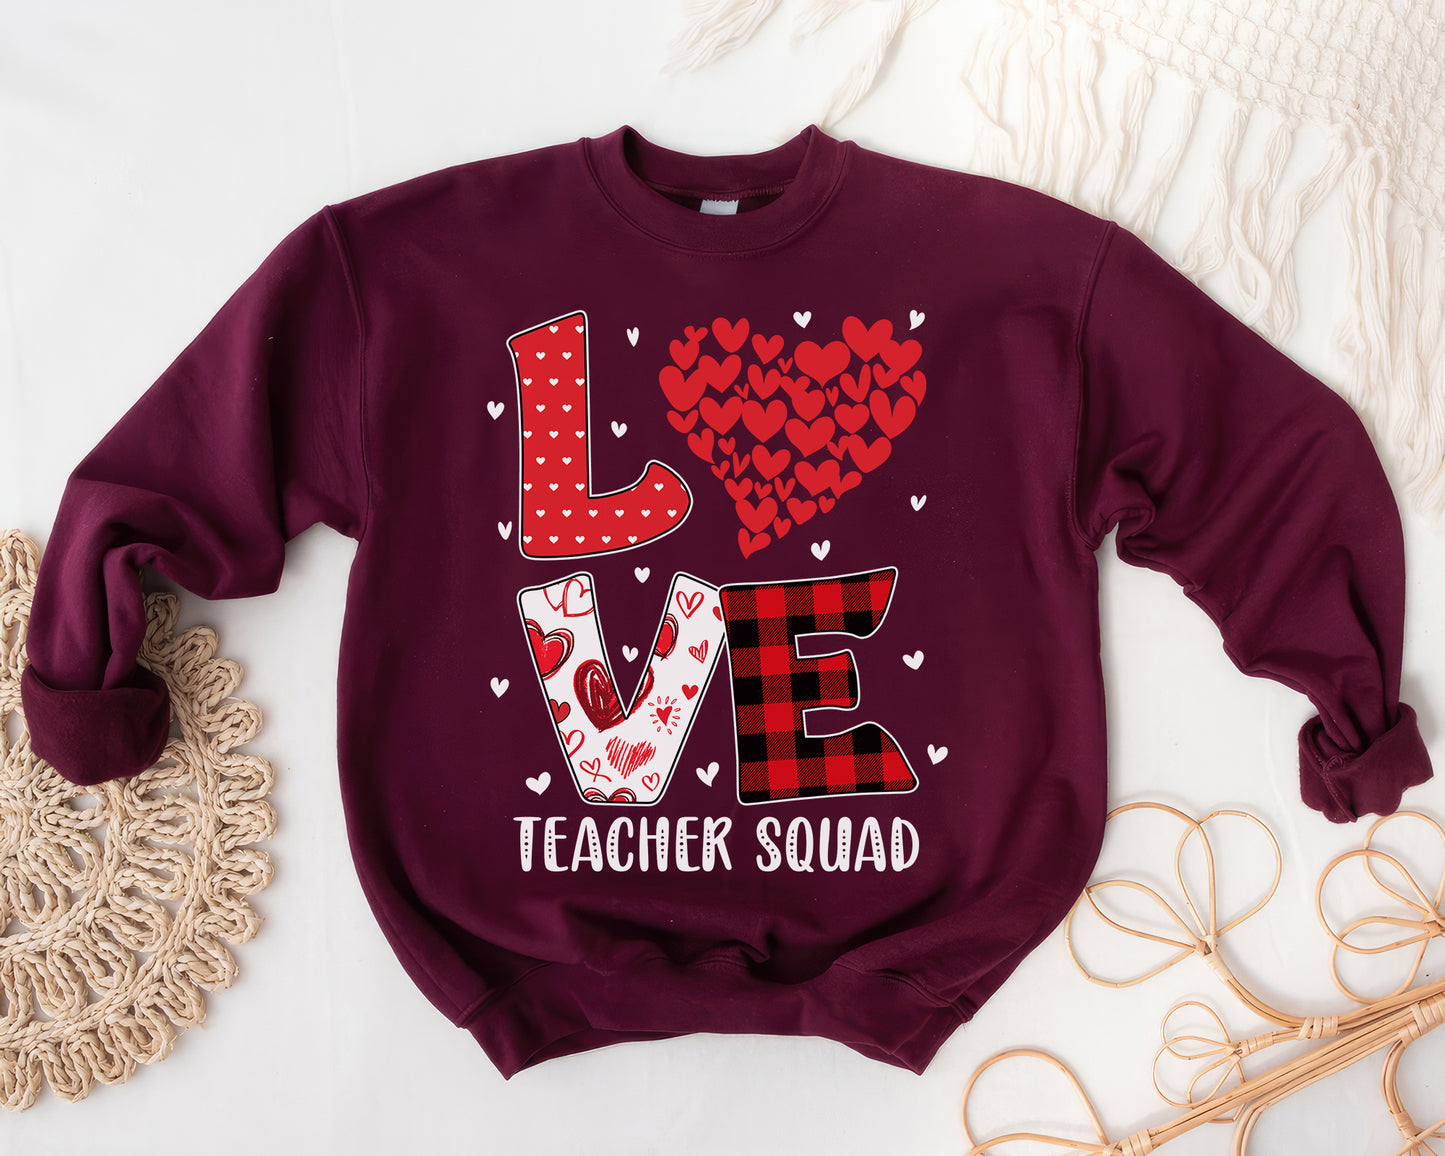 Tee Art Online - Valentine Red Hearts Within Heart LOVE Teacher Personalized Sweatshirt | Valentine's Day Kawaii Cute Gifts | Buffalo Plaid Pattern Design - Maroon